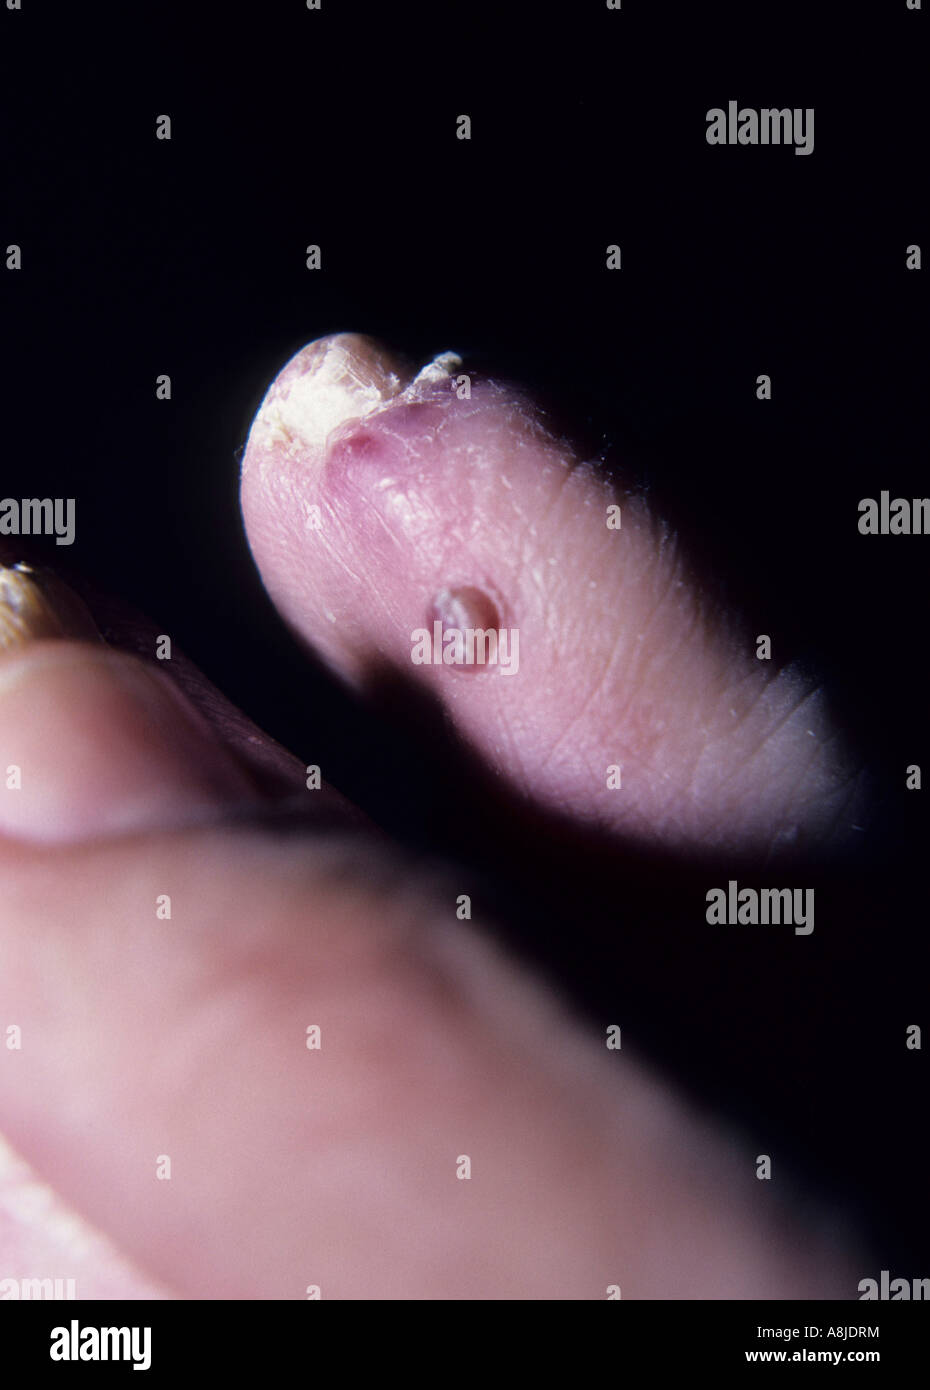 Close up photo of Kaposi sarcoma lesion on patient's finger. Stock Photo